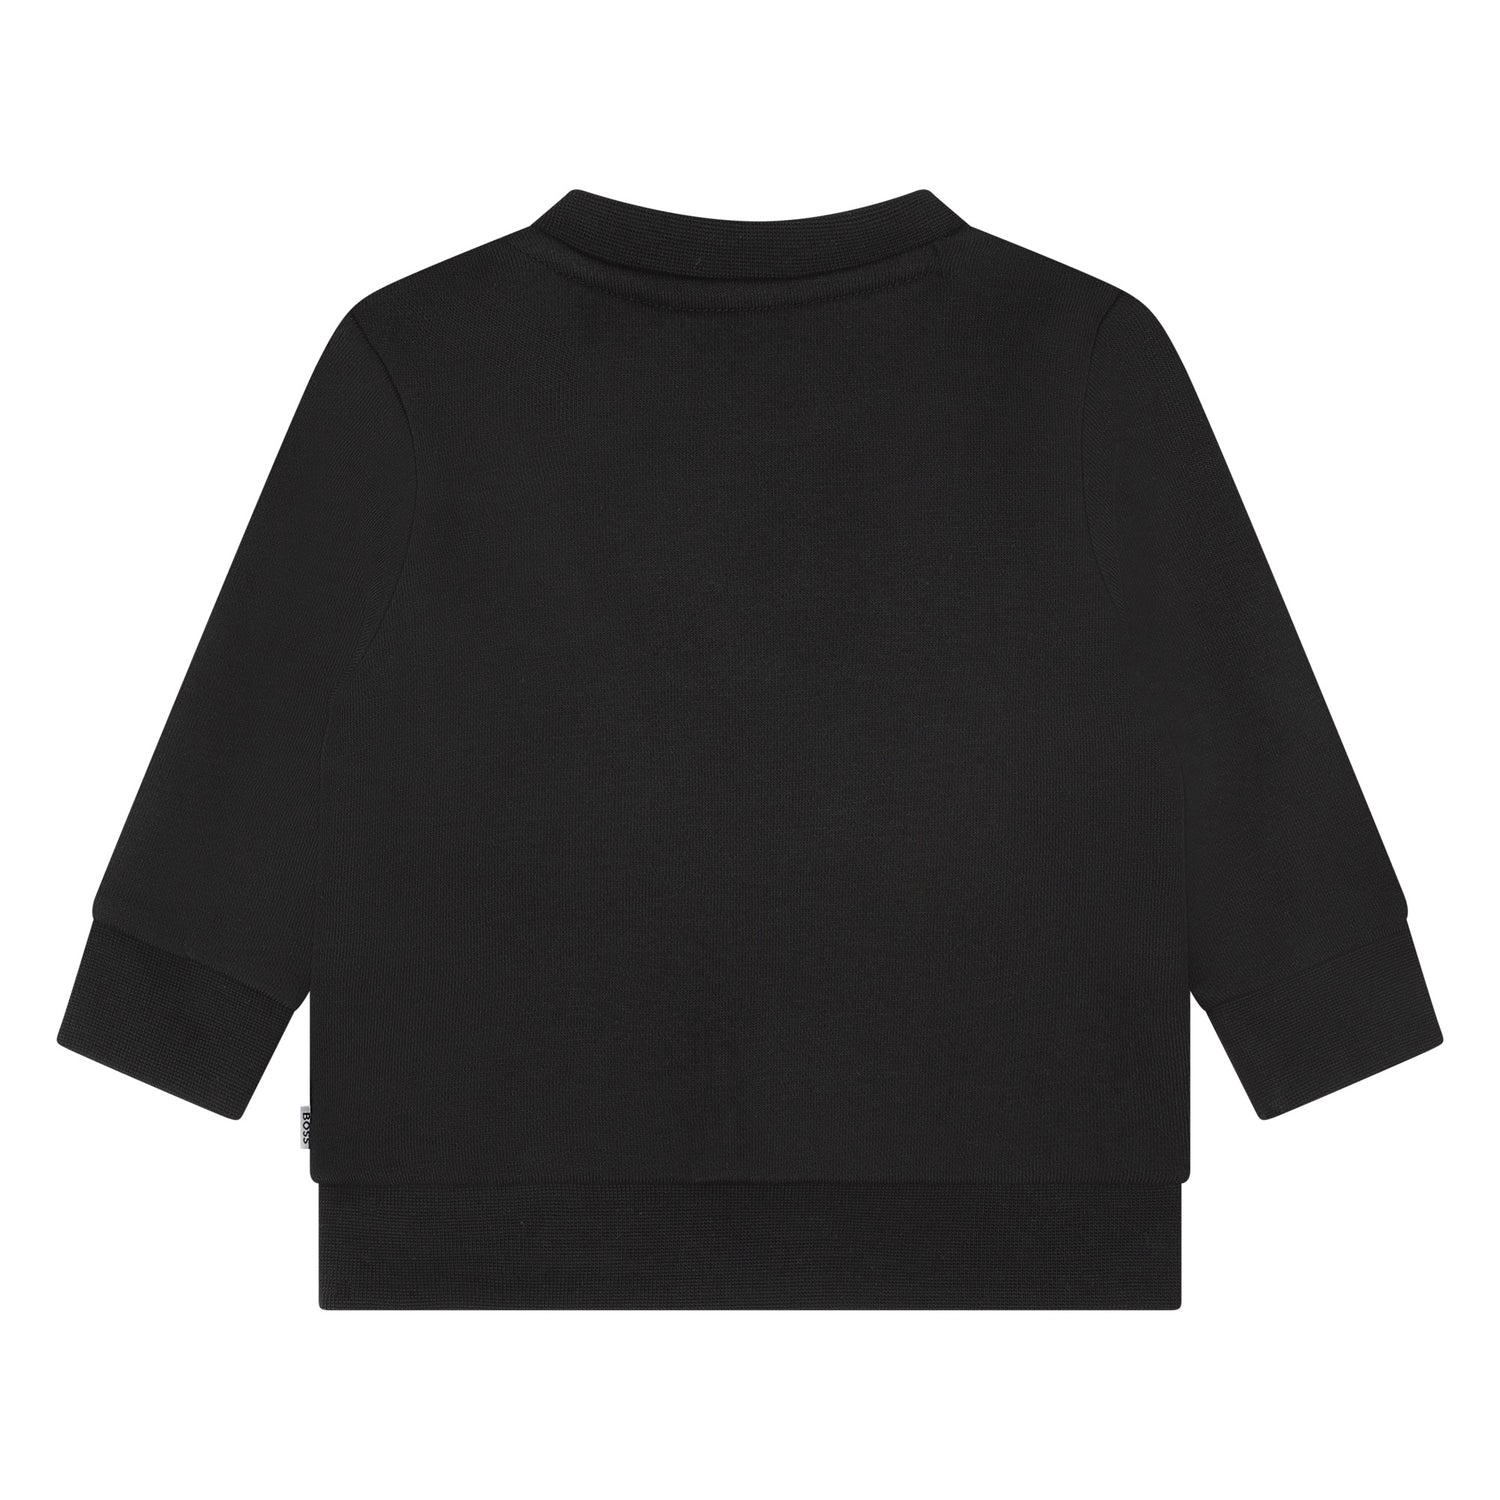 Hugo Boss Sweatshirt Style: J05A42